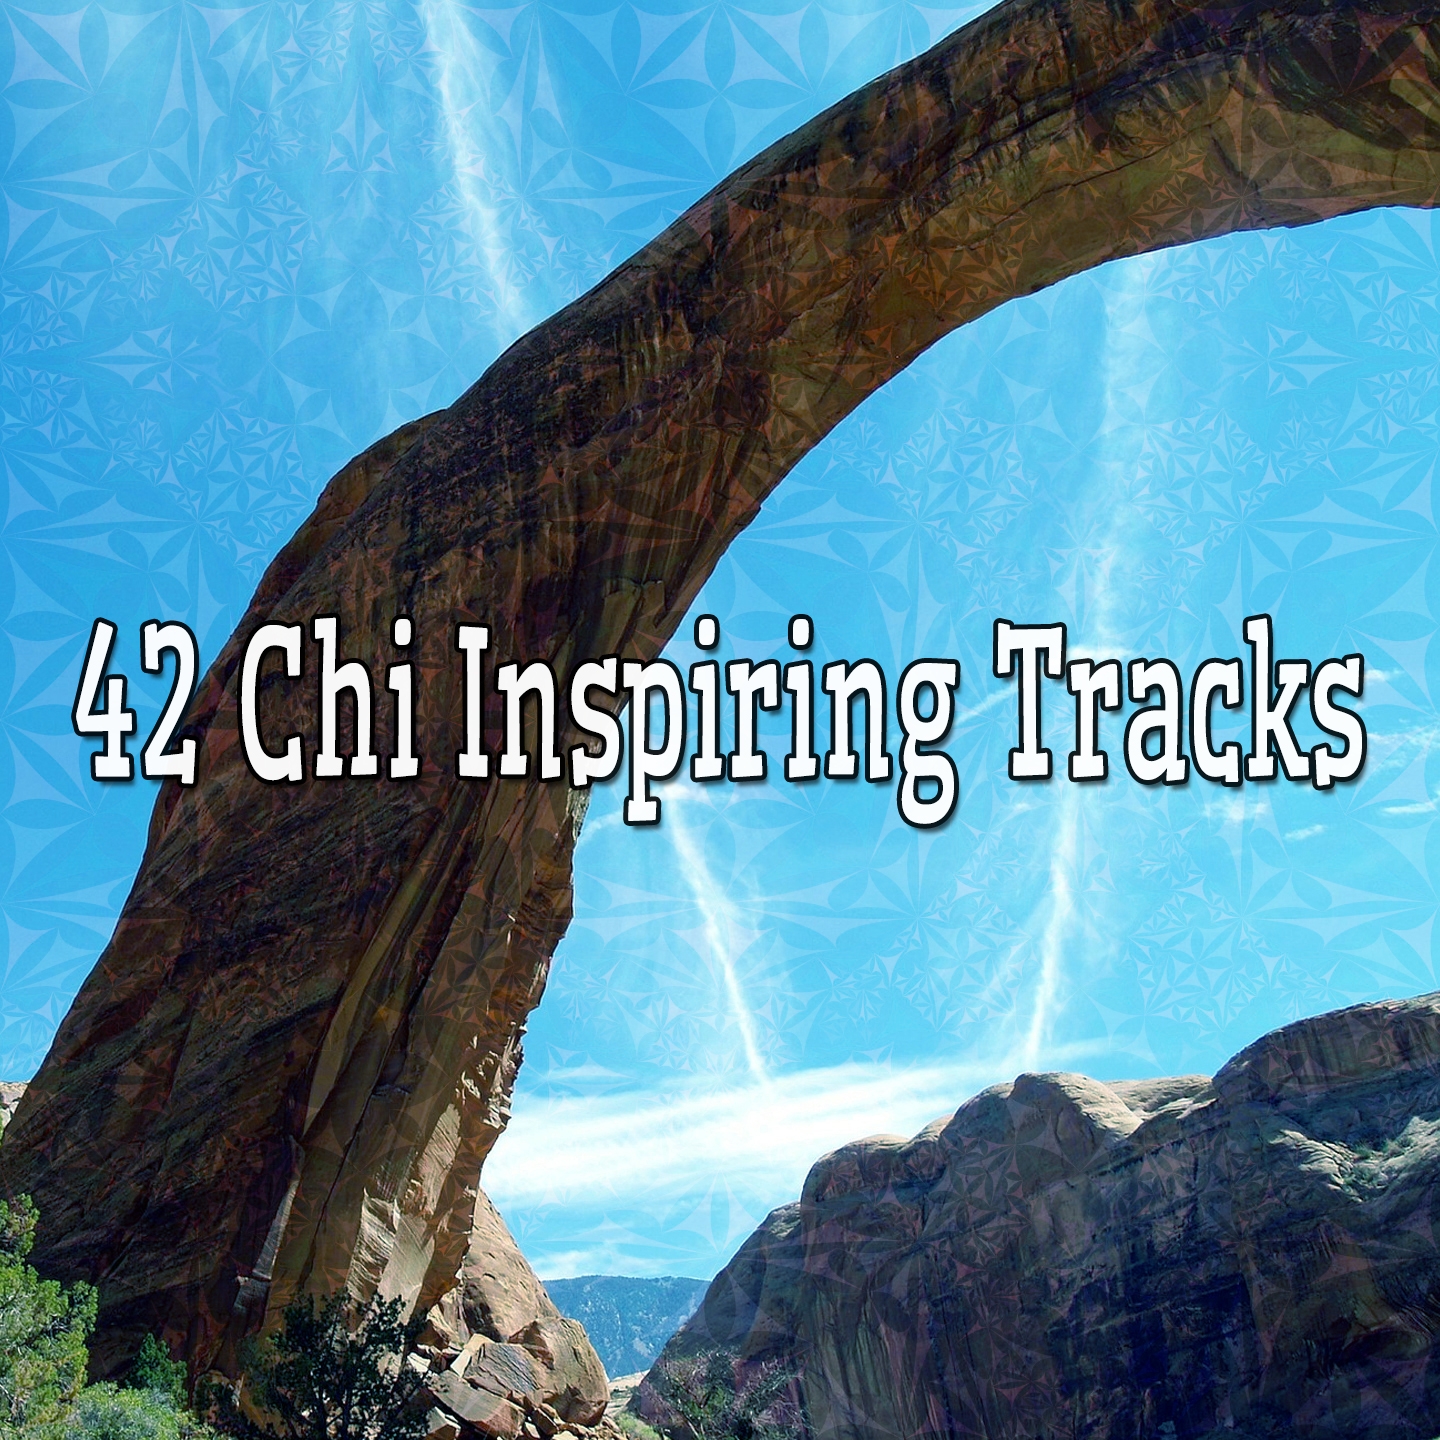 42 Chi Inspiring Tracks